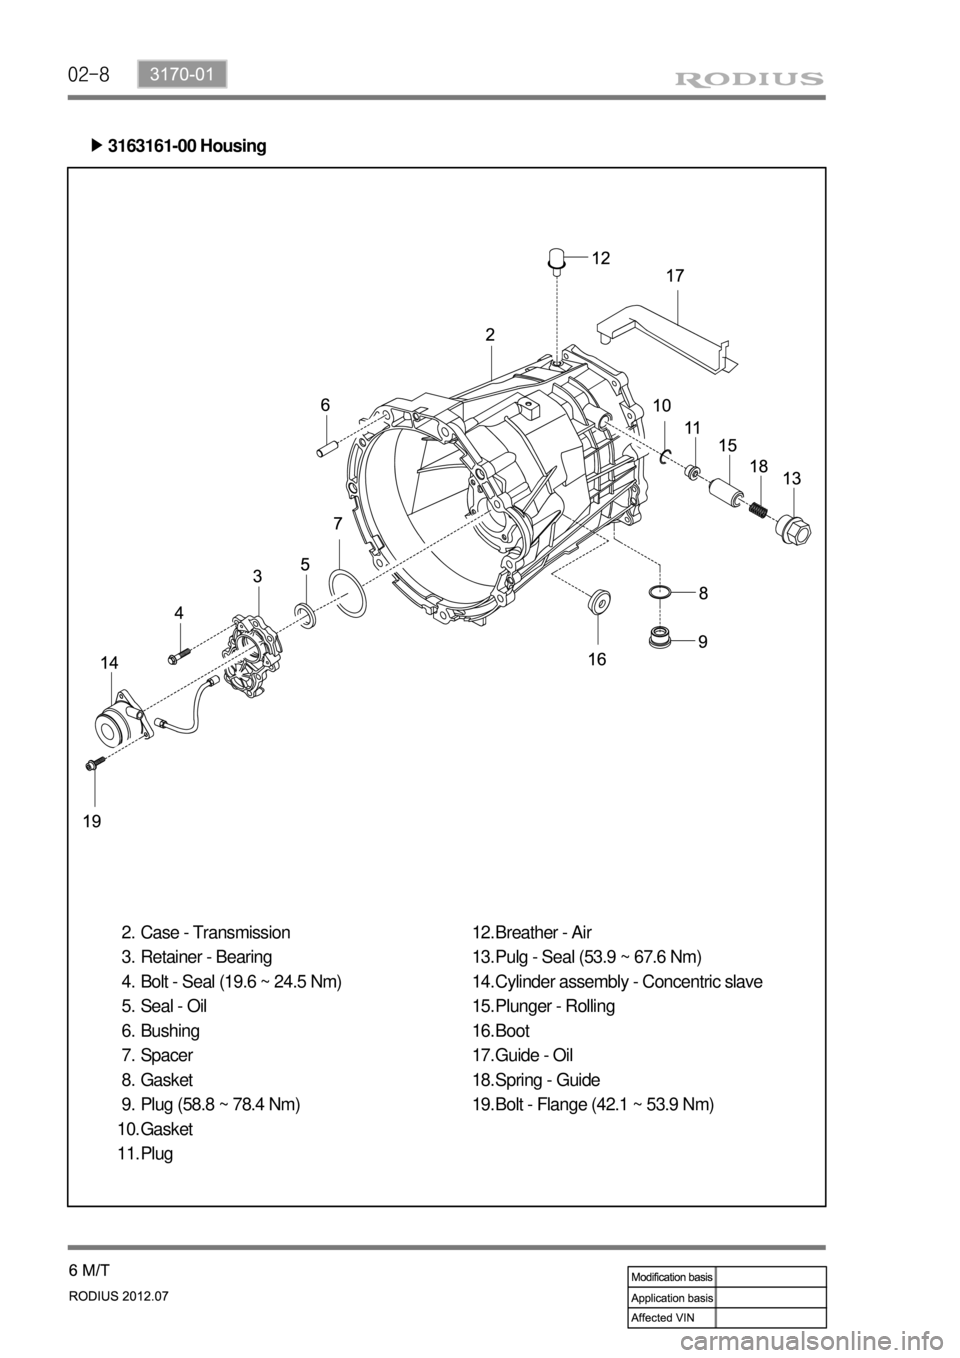 SSANGYONG RODIUS 2012  Service Manual 02-8
3163161-00 Housing ▶
Case - Transmission
Retainer - Bearing
Bolt - Seal (19.6 ~ 24.5 Nm)
Seal - Oil
Bushing
Spacer
Gasket
Plug (58.8 ~ 78.4 Nm)
Gasket
Plug 2.
3.
4.
5.
6.
7.
8.
9.
10.
11.Breath